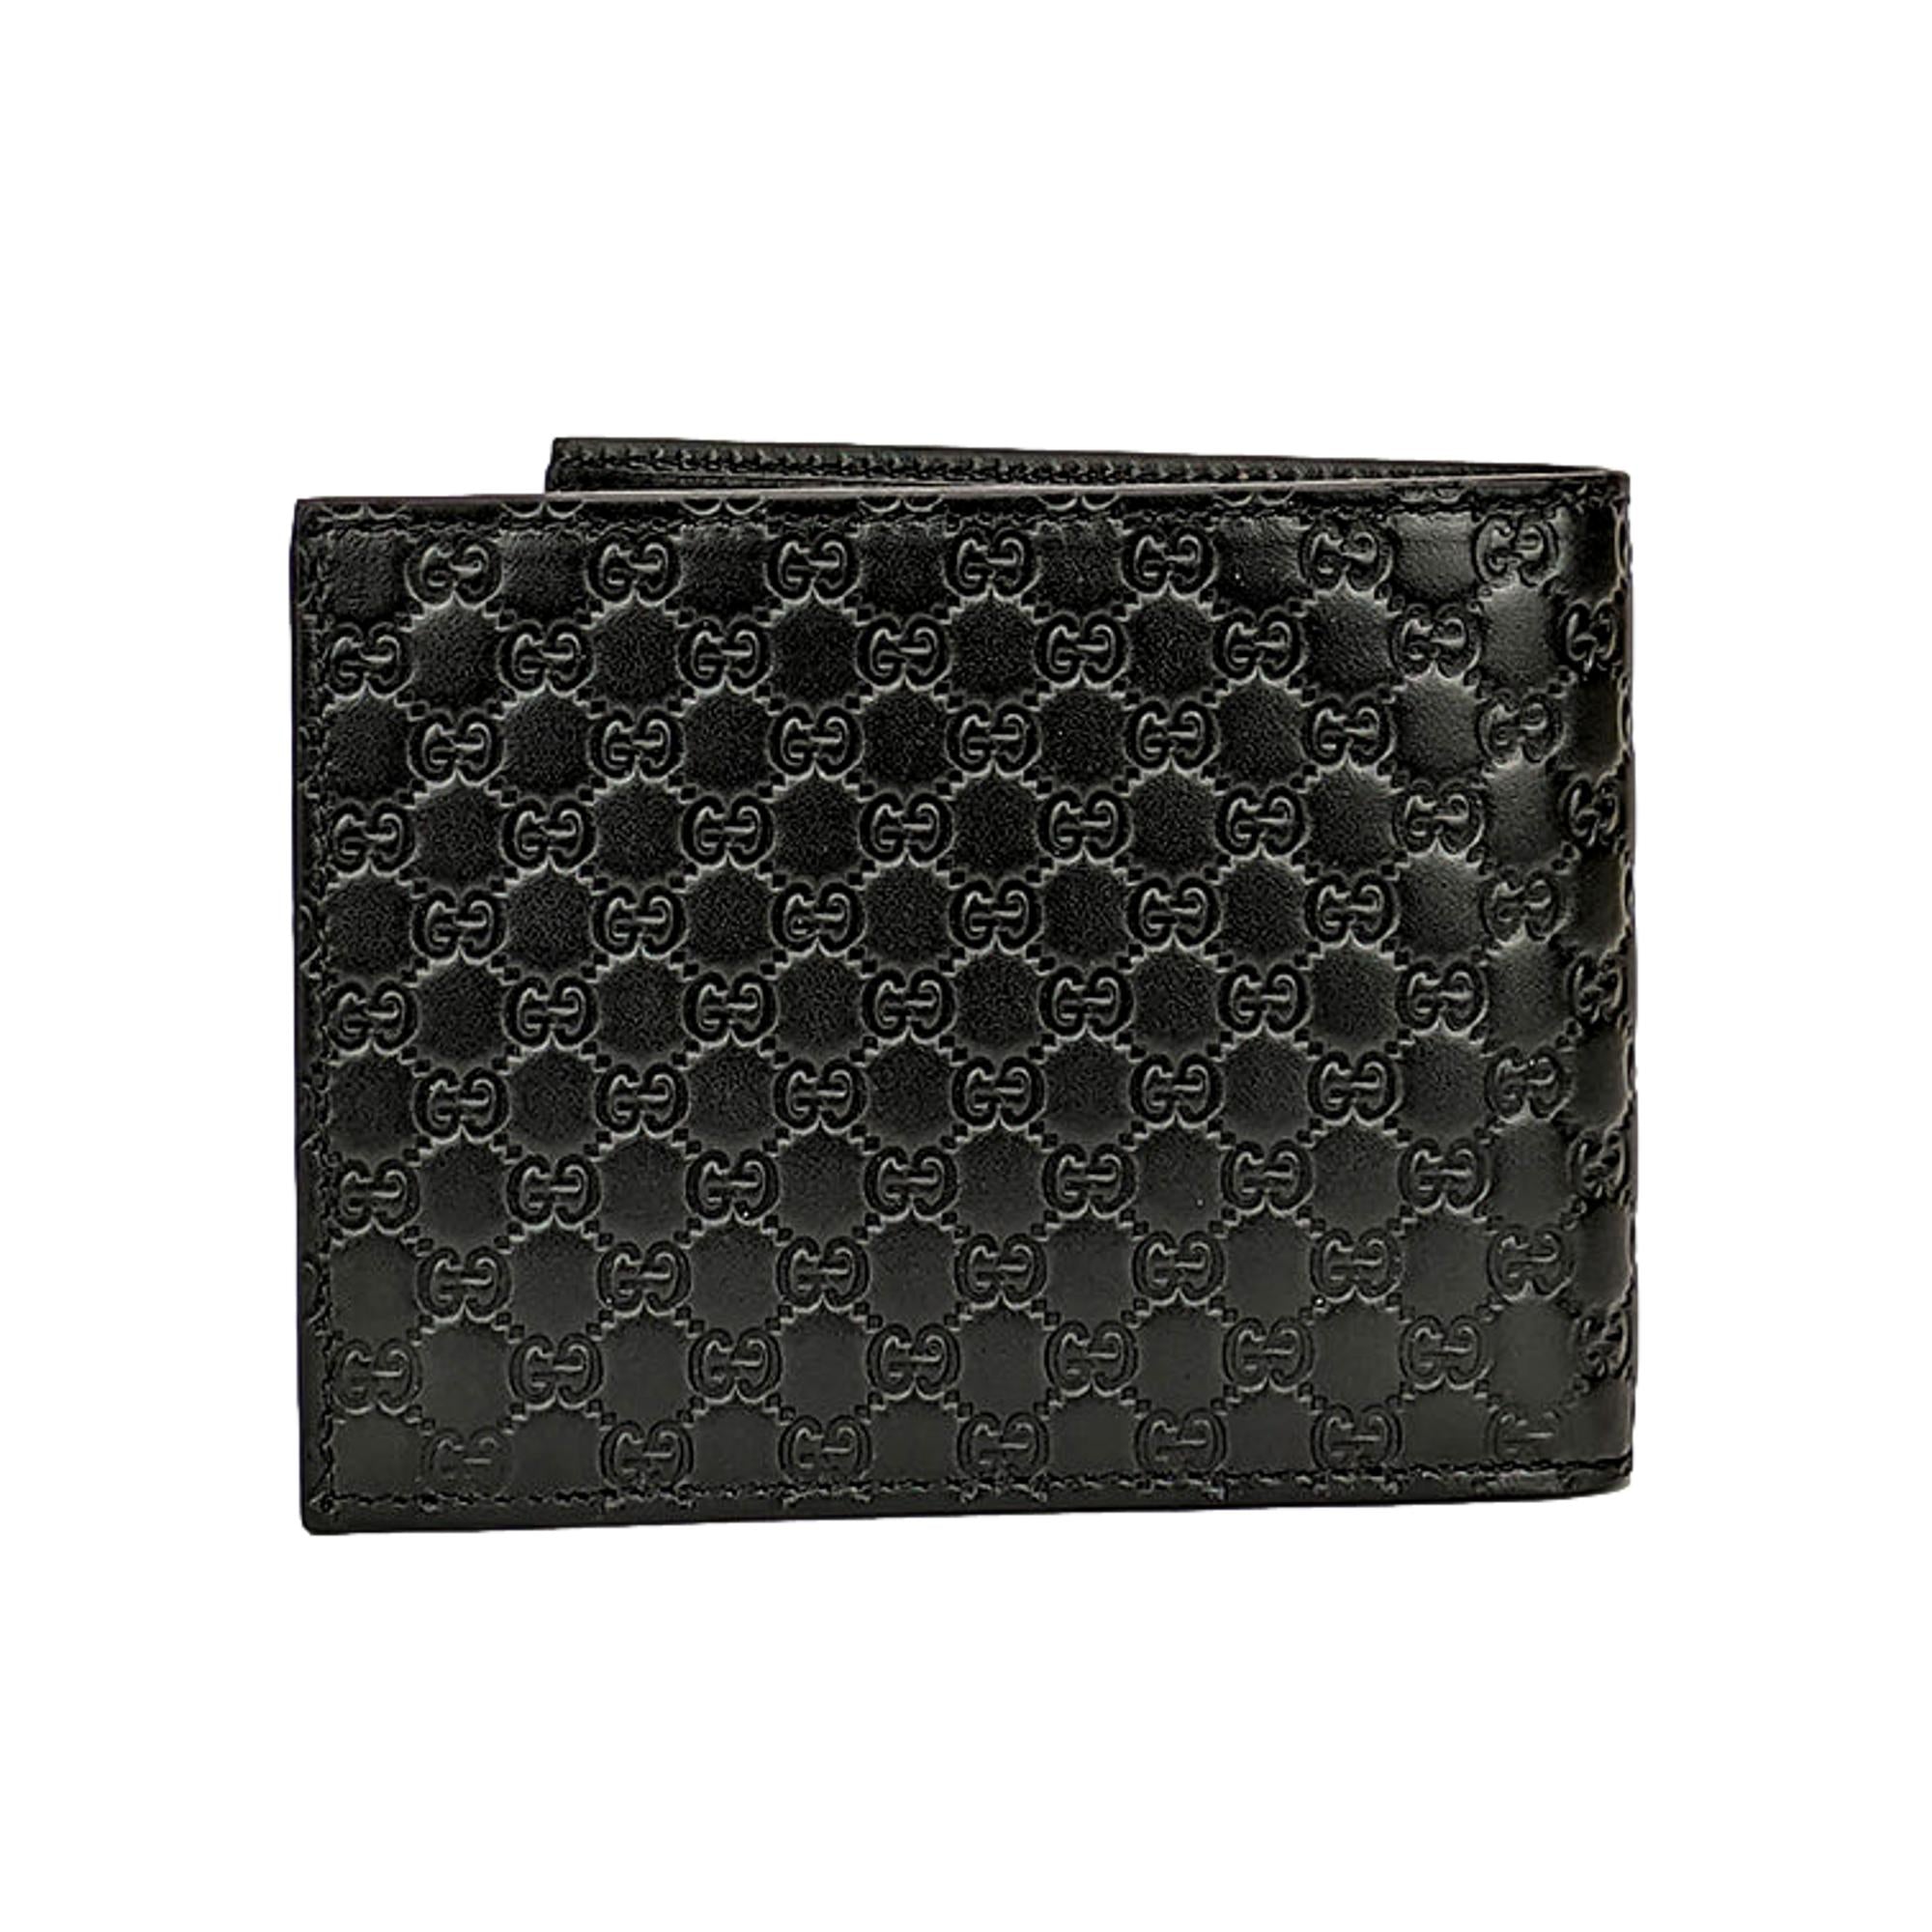 Gucci Men's Microguccissima GG Black Leather Trifold ID Wallet